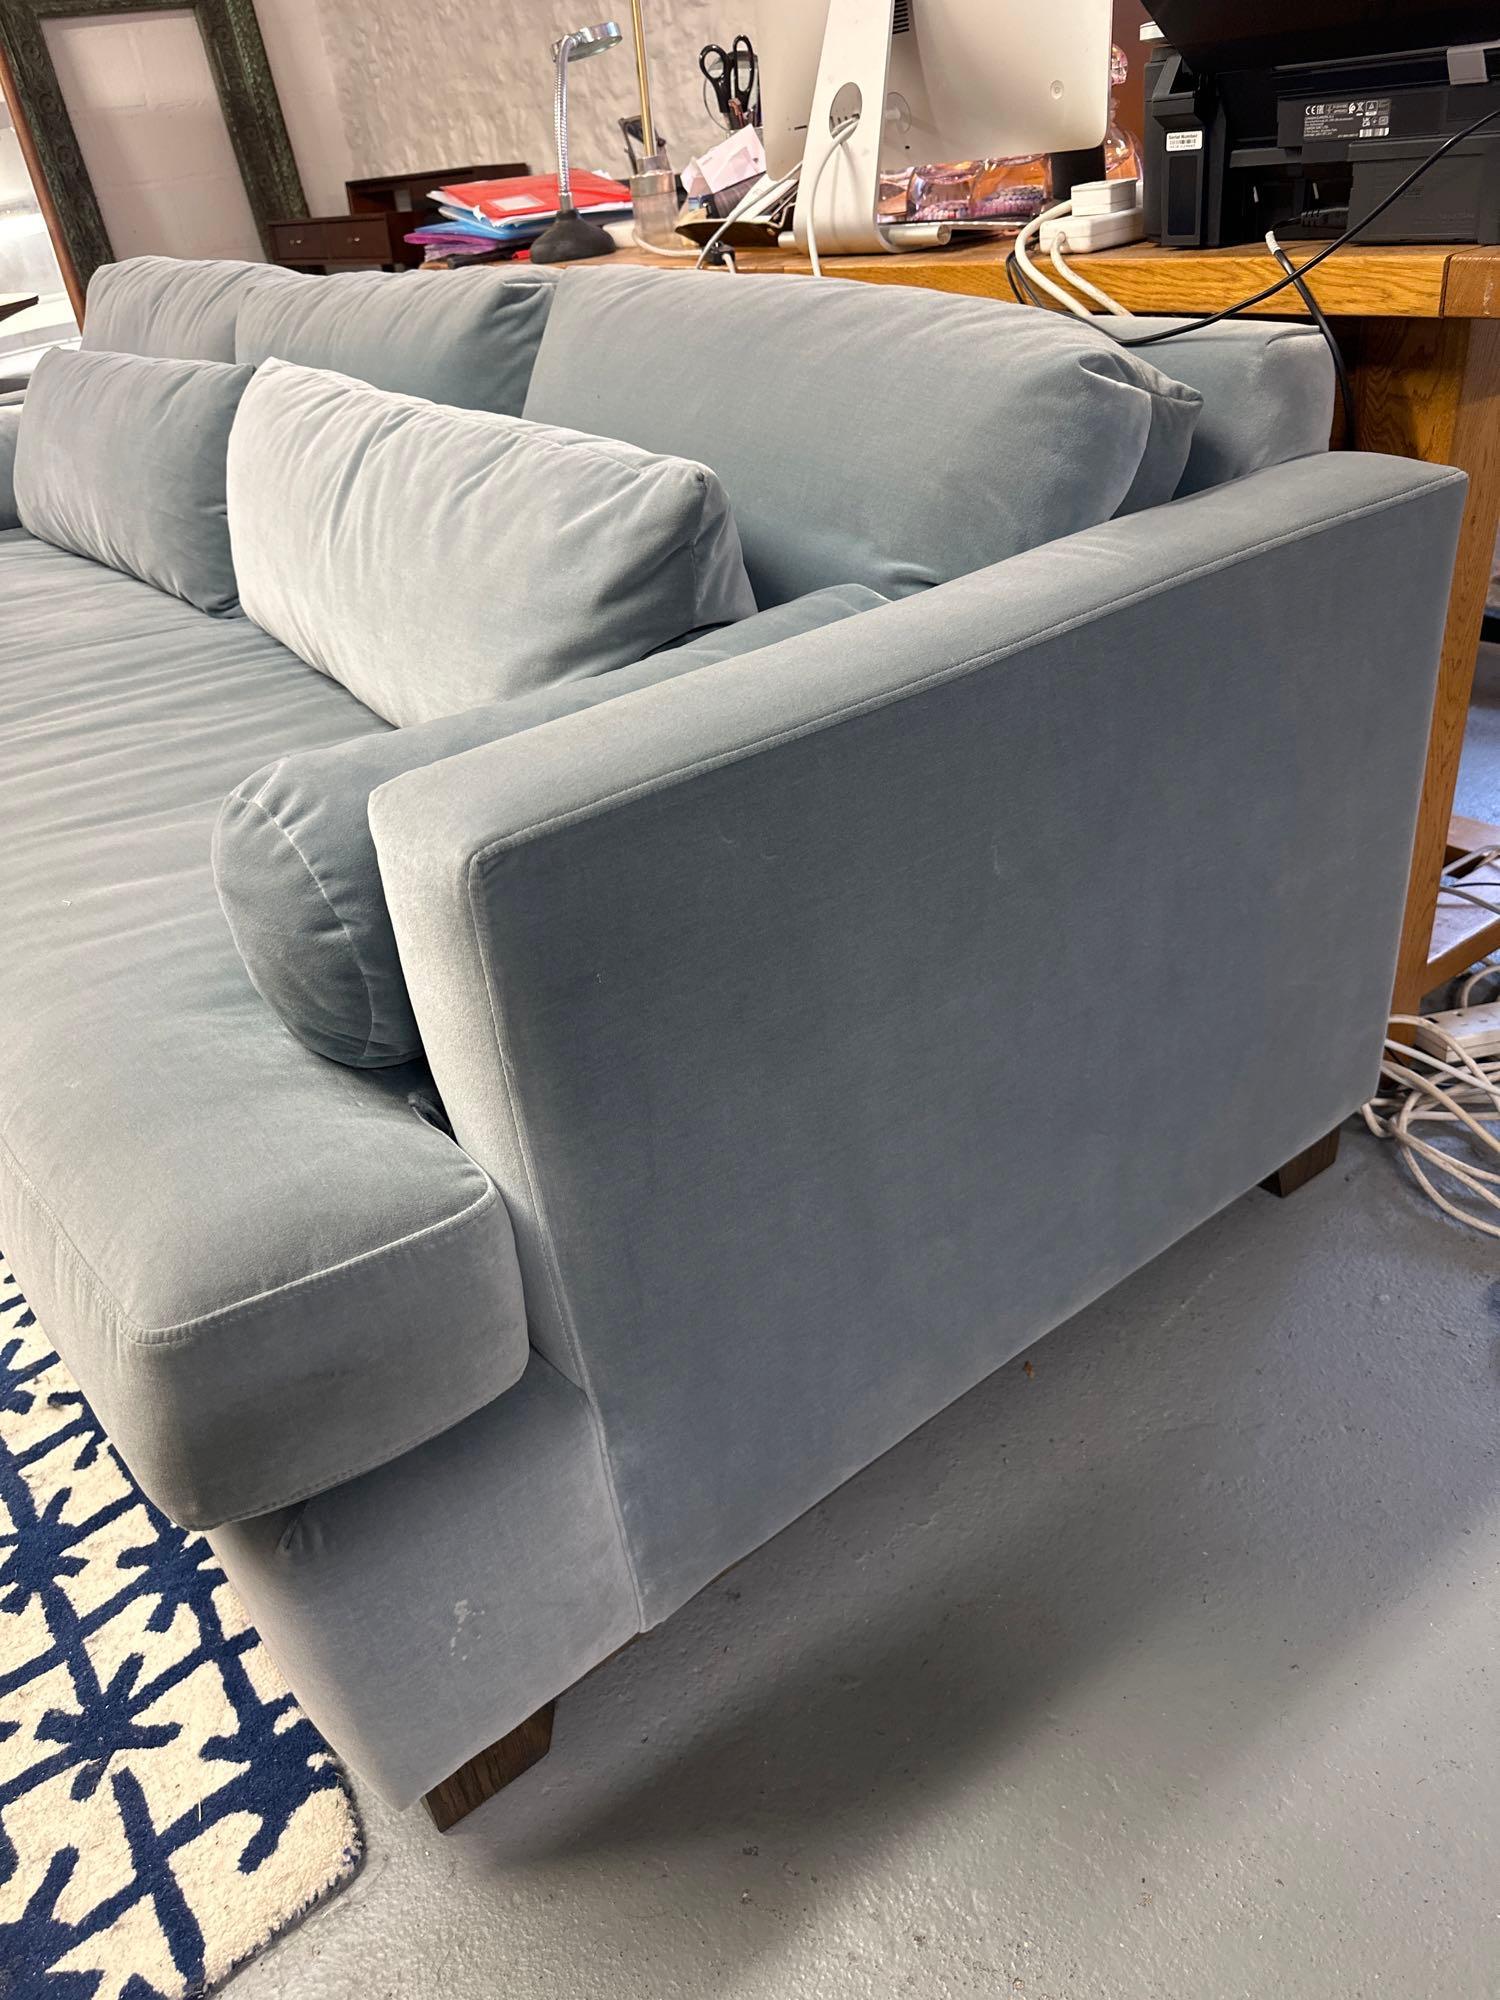 Eveleyn Sofa Deep Media sofa in Teal cotton velvet - An incredibly spacious and comfortable sofa - Image 3 of 3